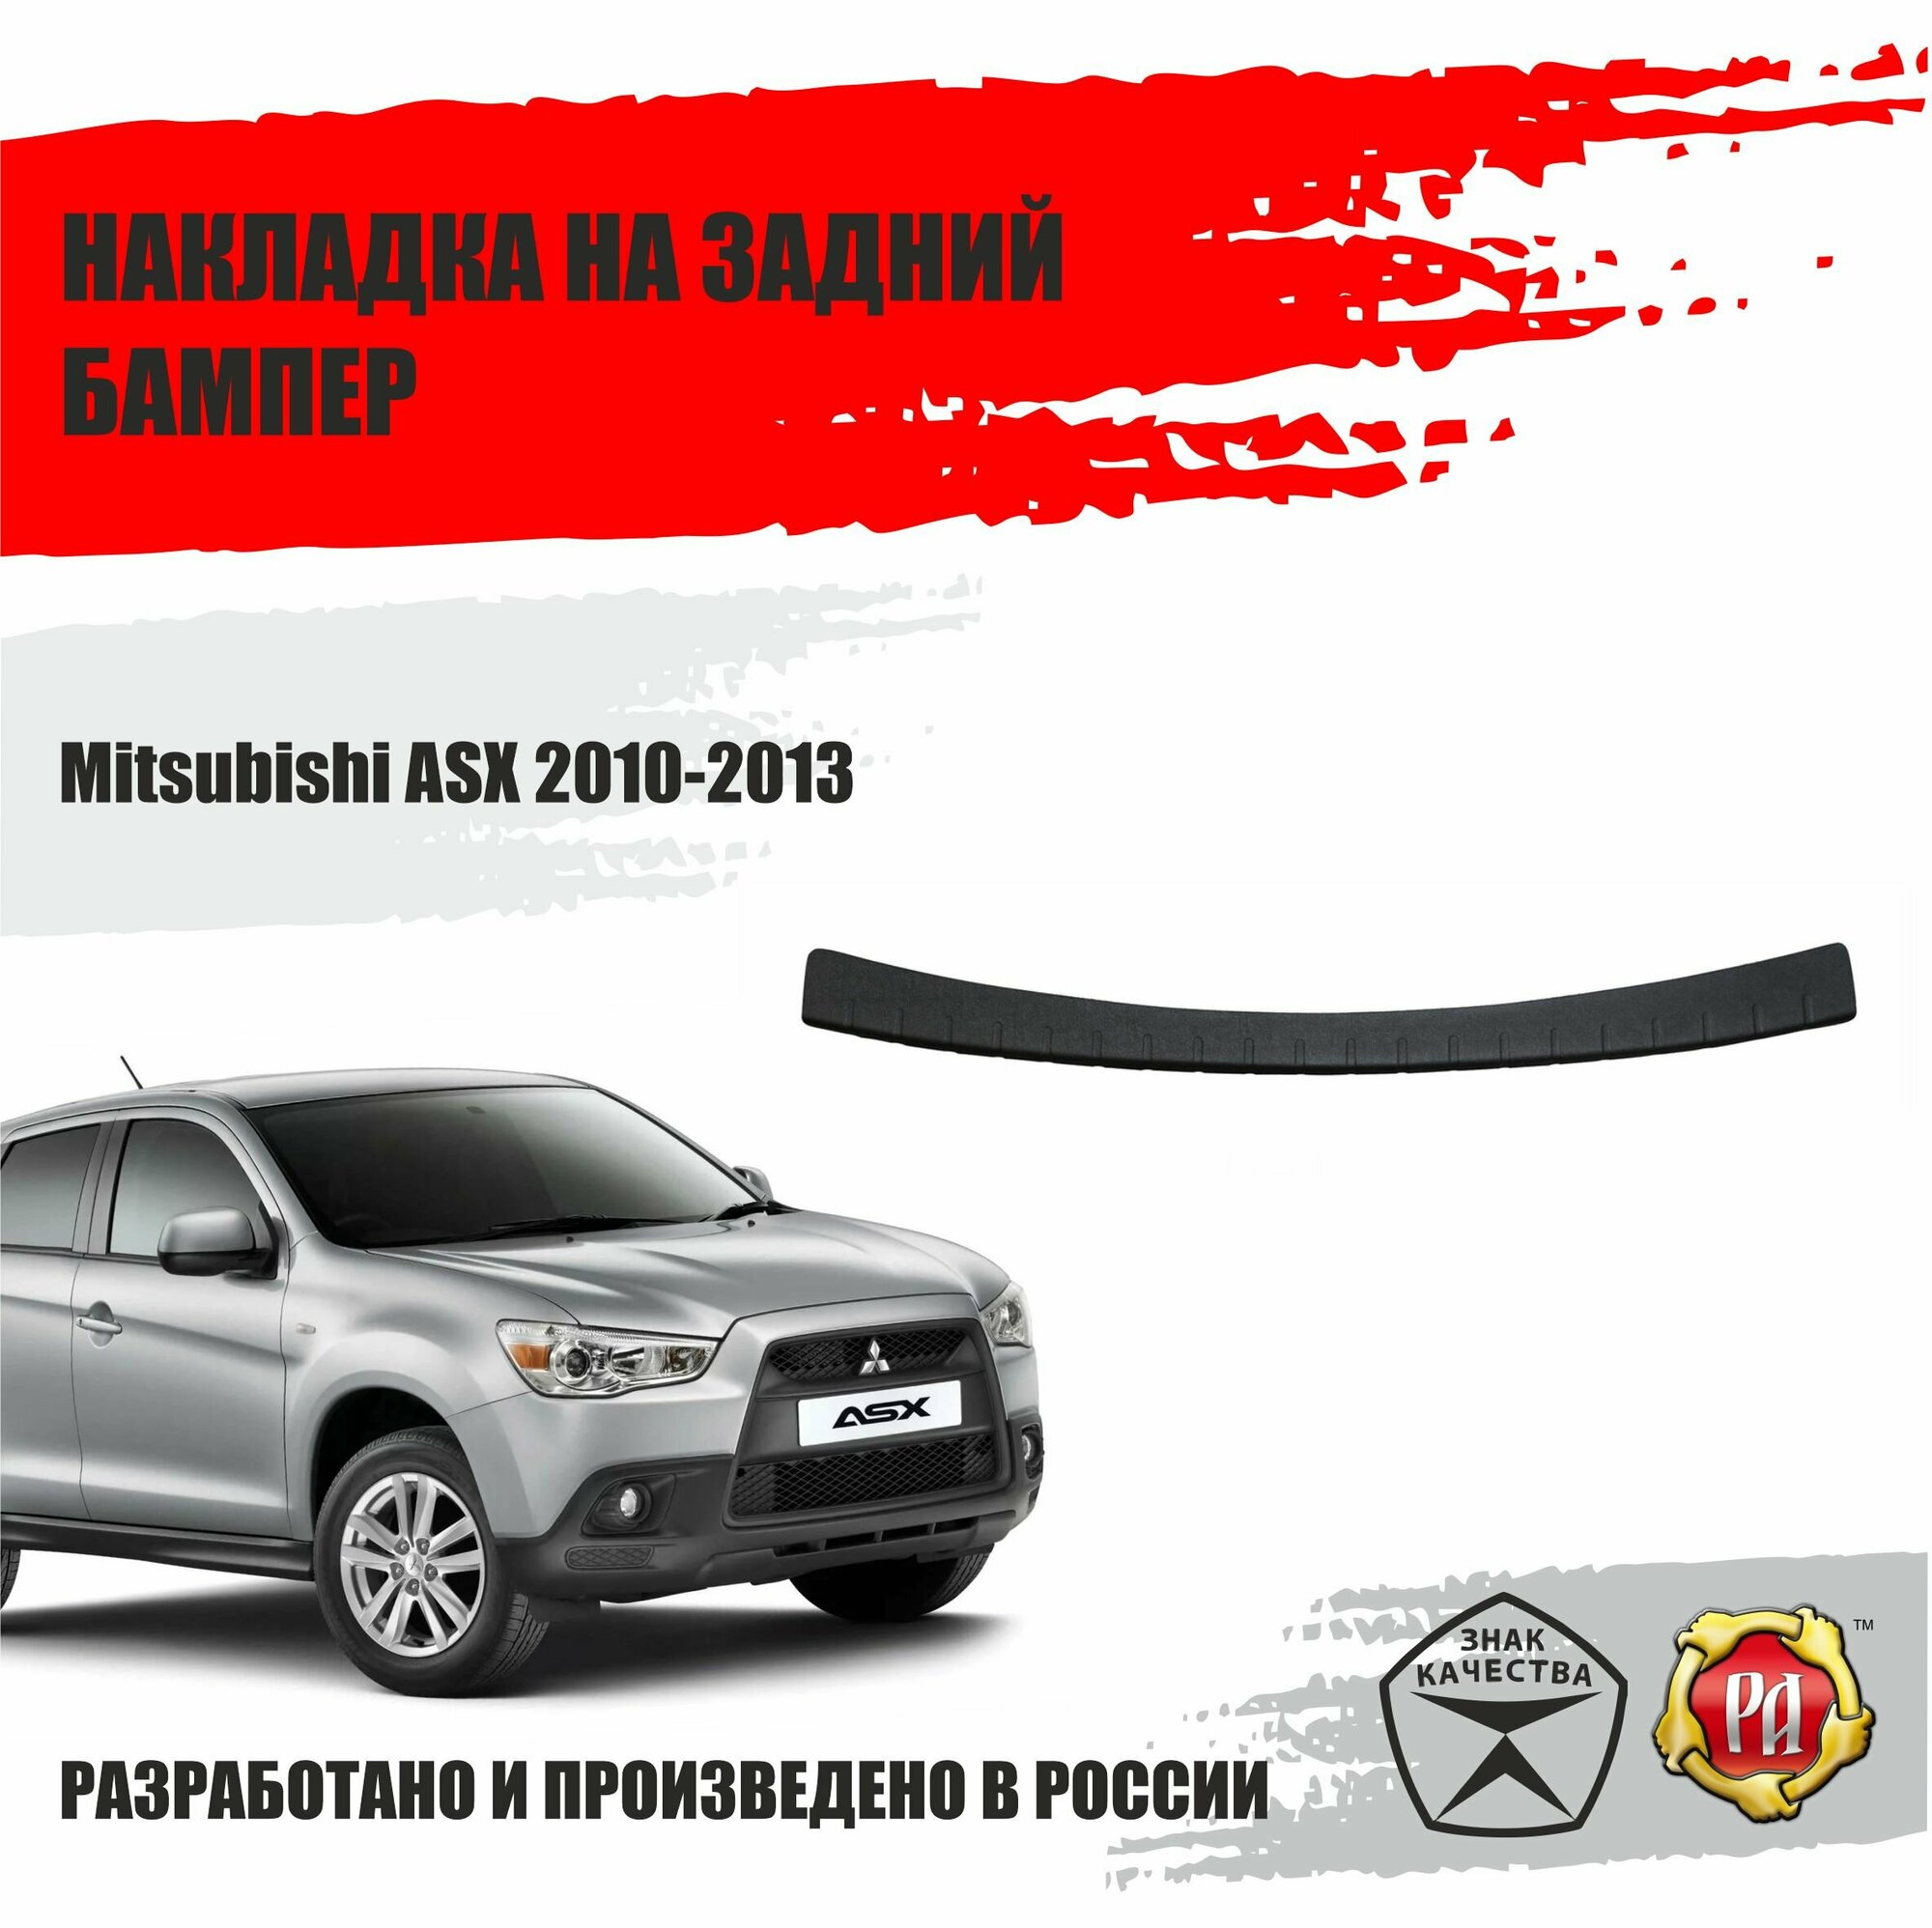 Накладка на задний бампер Русская Артель Mitsubishi ASX 2010-2013